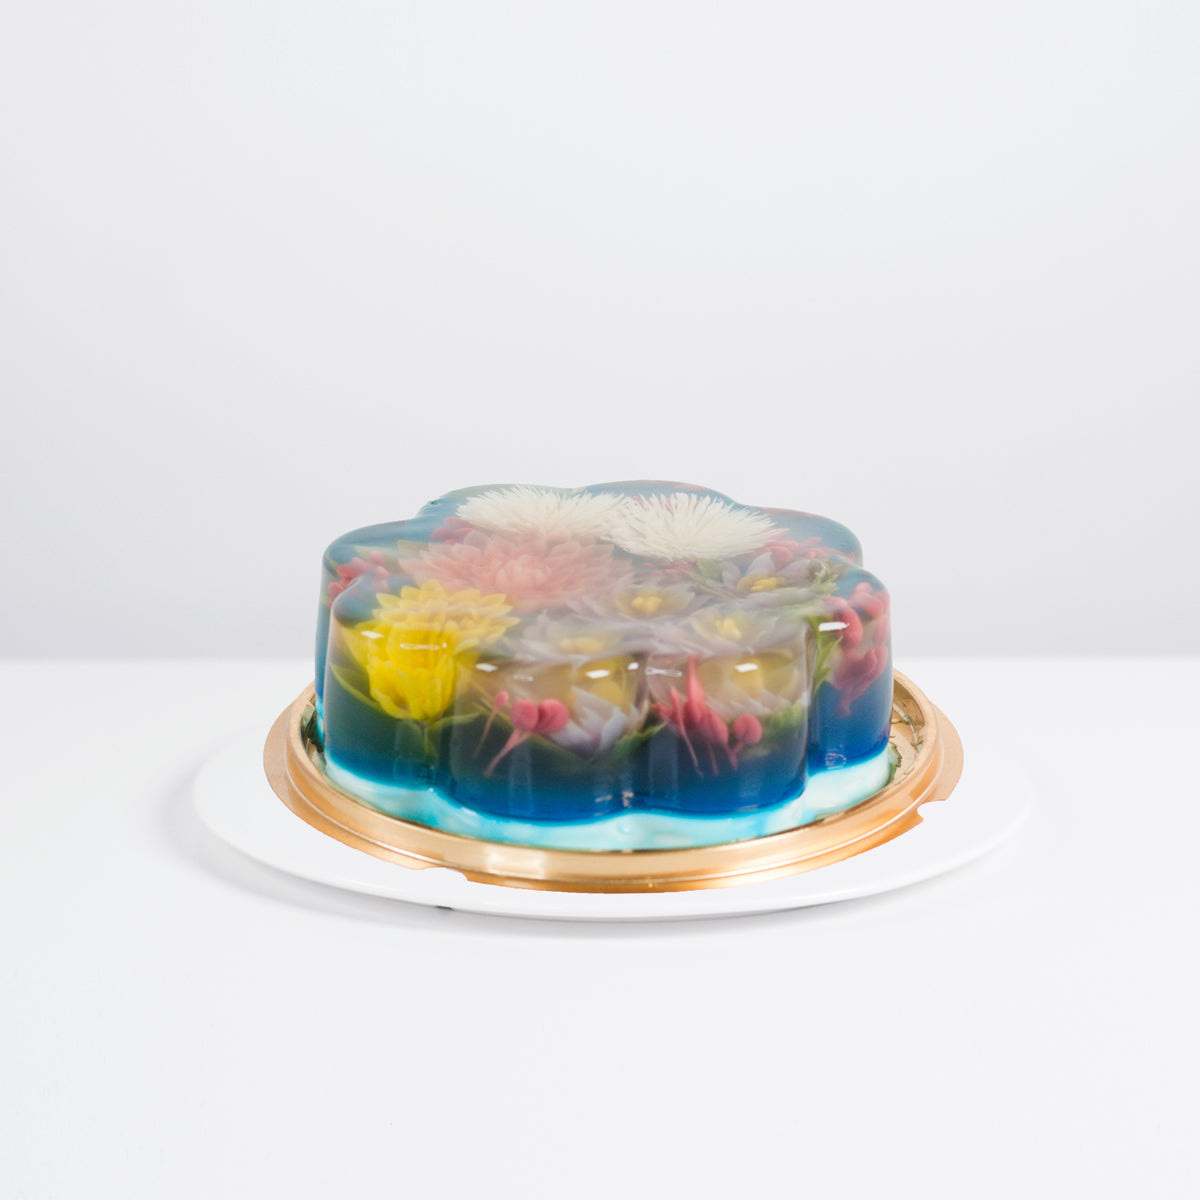 Gelatin Under The Sea Cake — Jello Layer Cake Tutorial